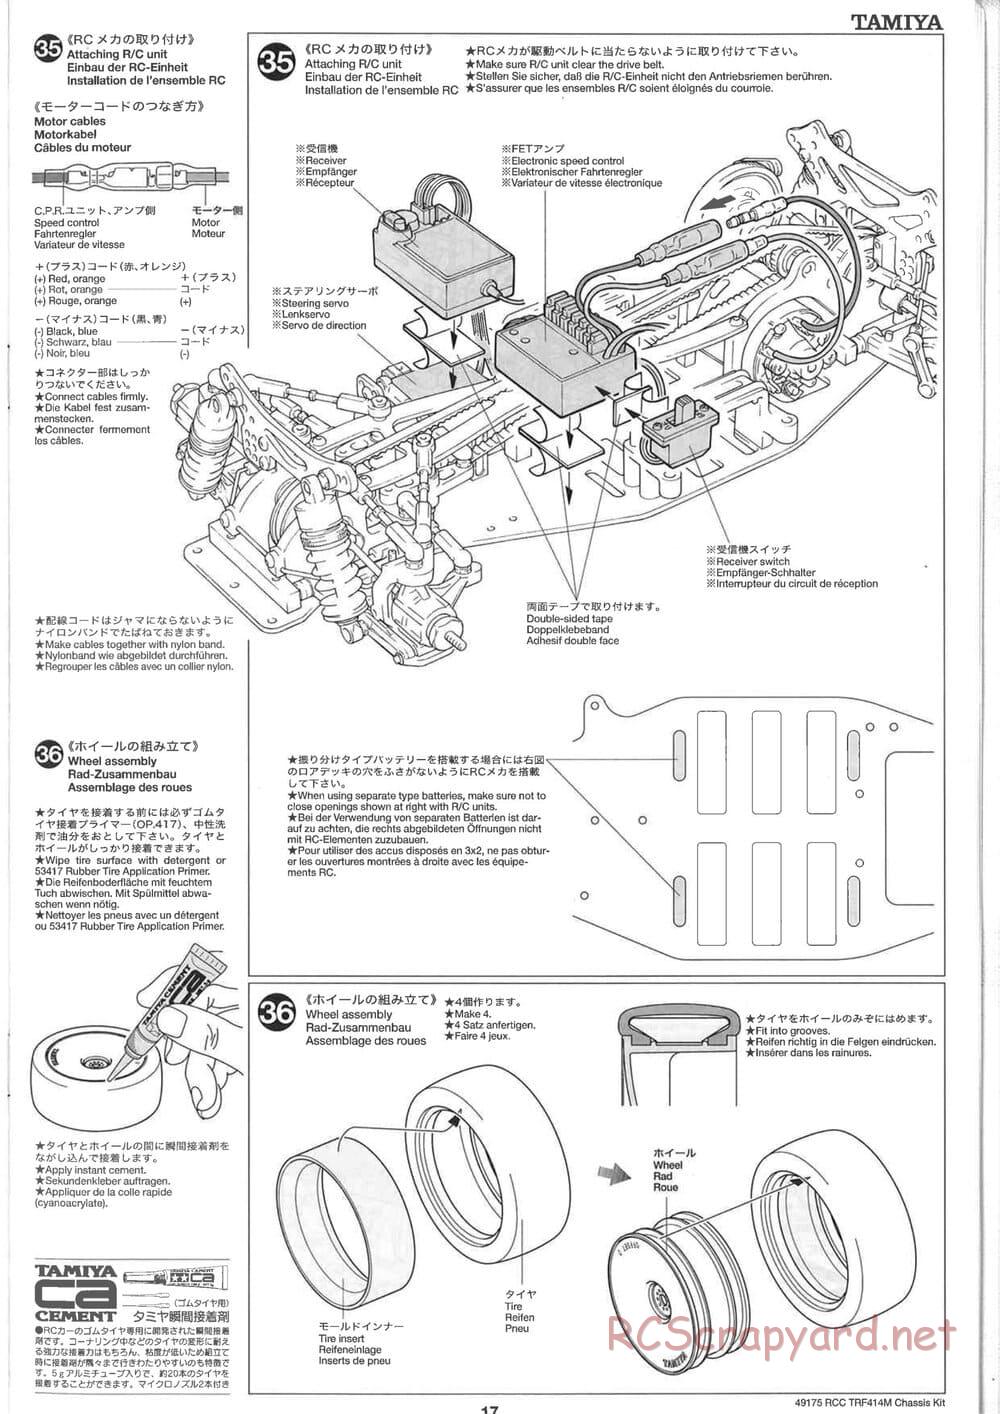 Tamiya - TRF414M Chassis - Manual - Page 17